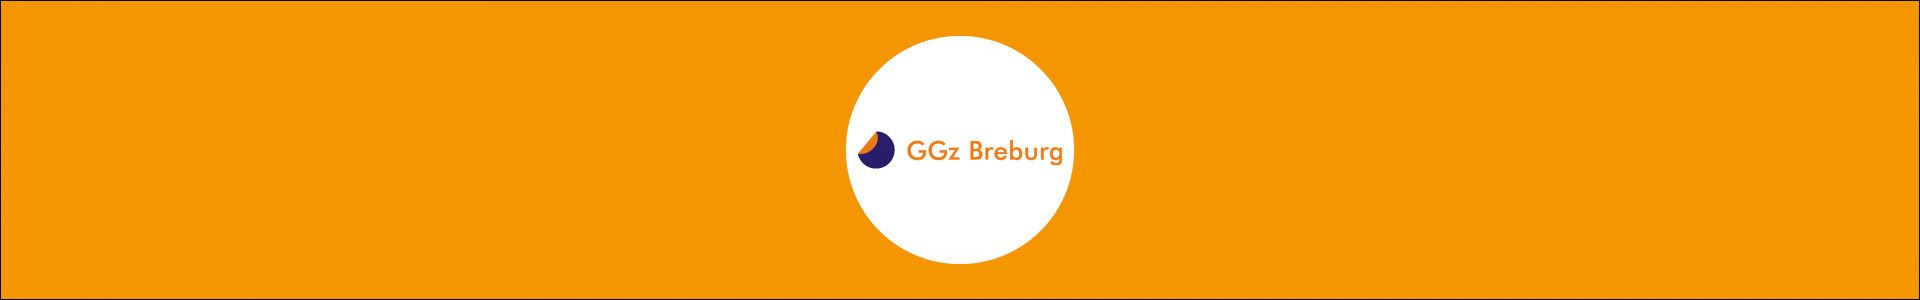 GGZ Breburg